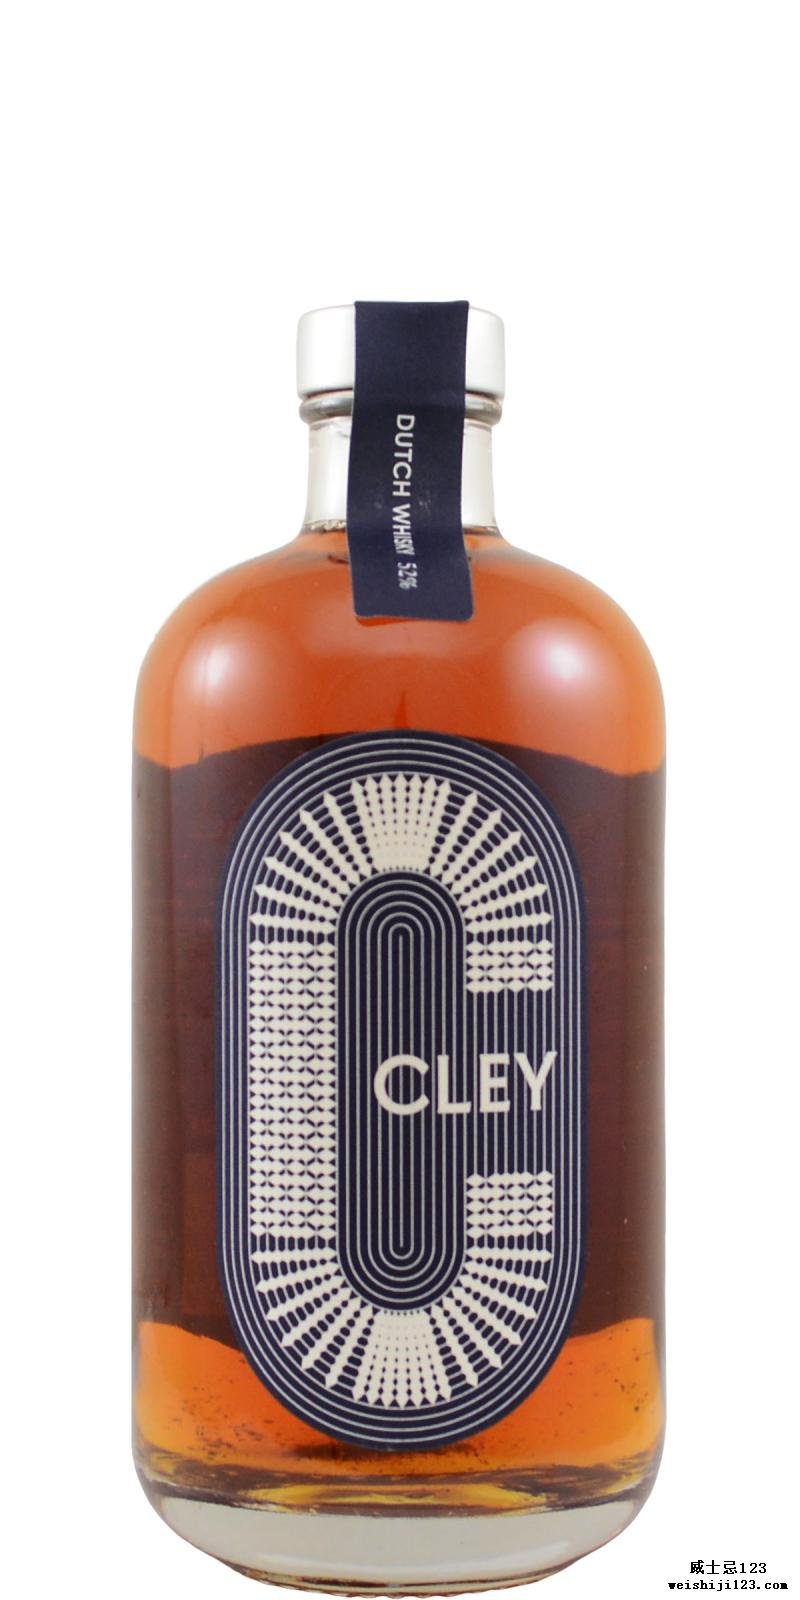 Cley Whisky Dutch Cask Strength Single Malt Whisky